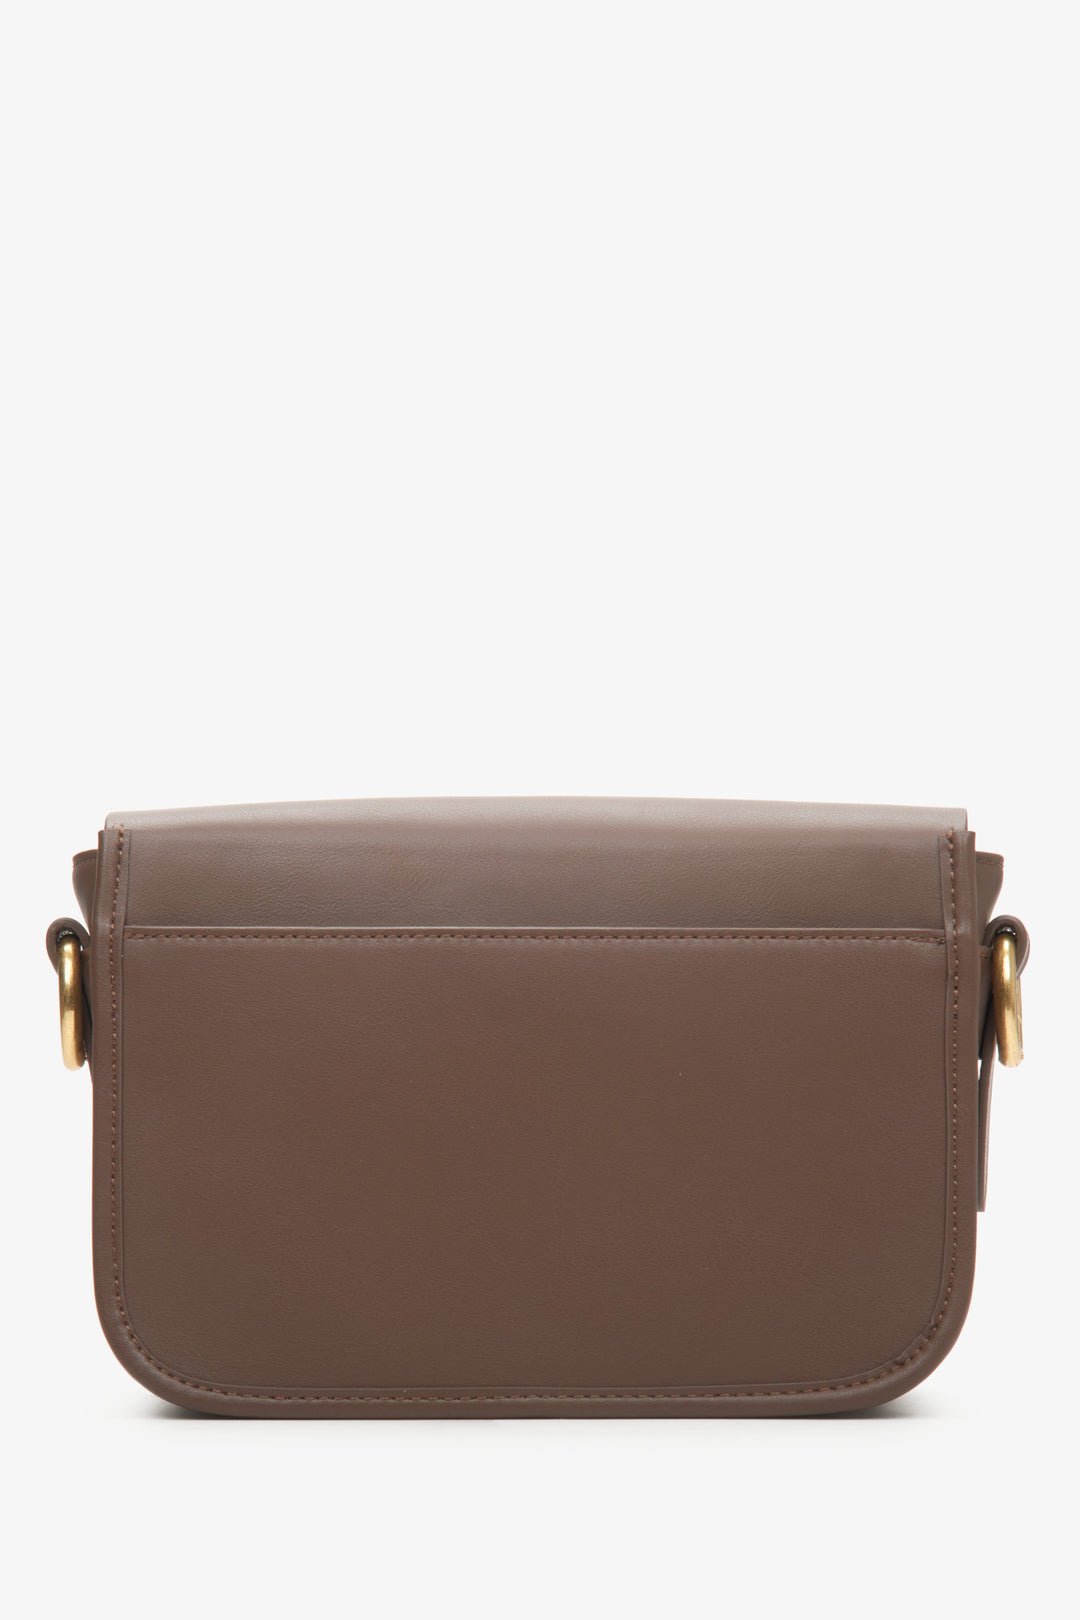 Women's dark brown leather handbag by Estro - reverse side.